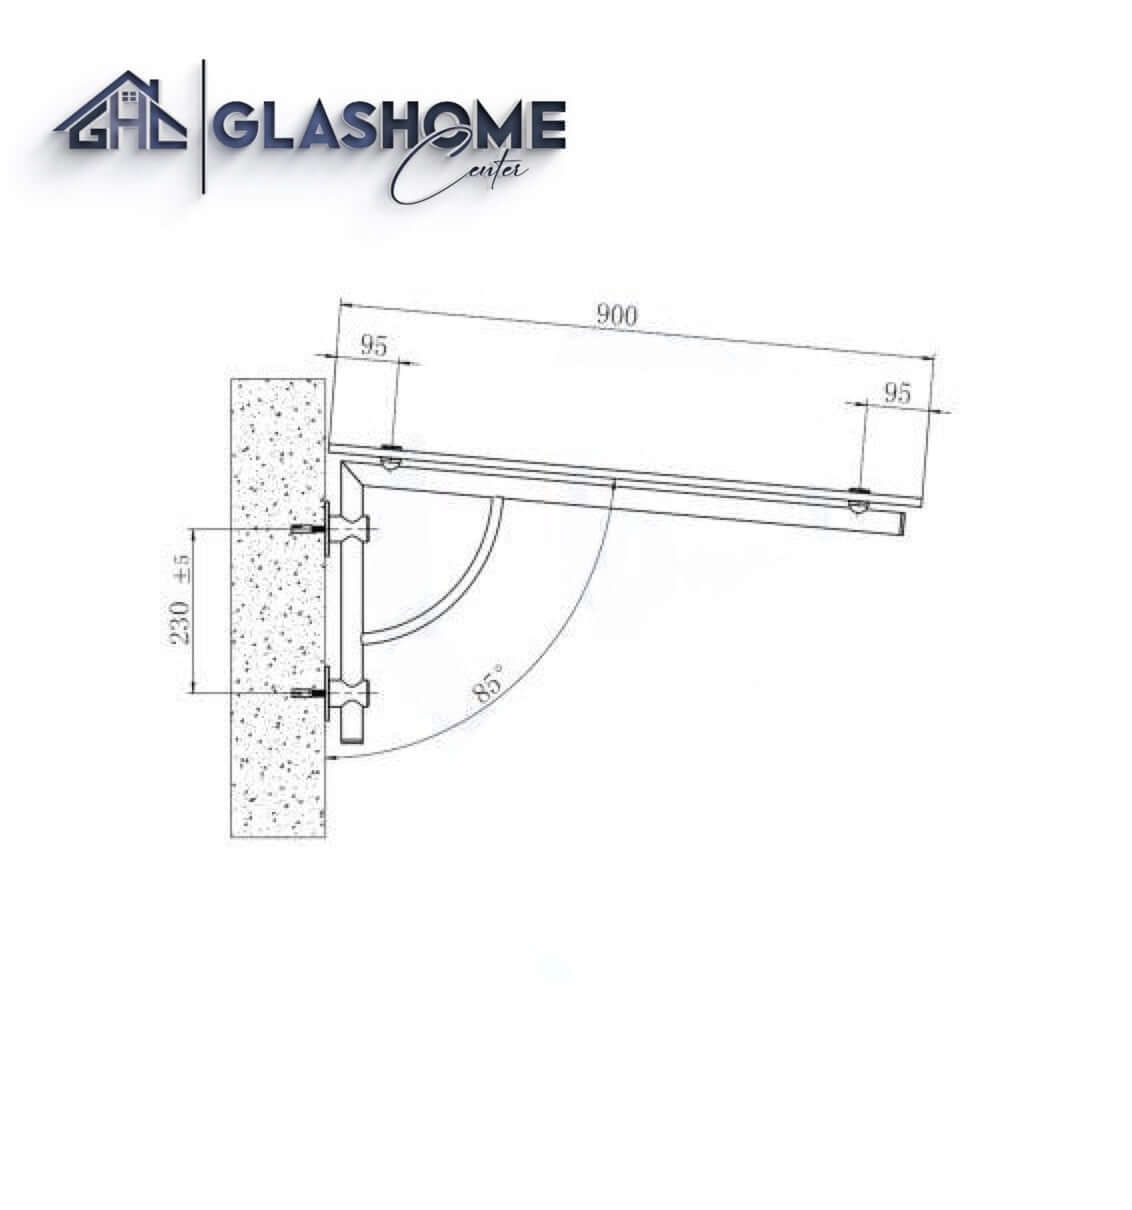 GlasHomeCenter - glass canopy - Clear glass - 190x90cm - 13.1mm VSG - incl. 2 Edelstahlhalterungen Variant "Athens"